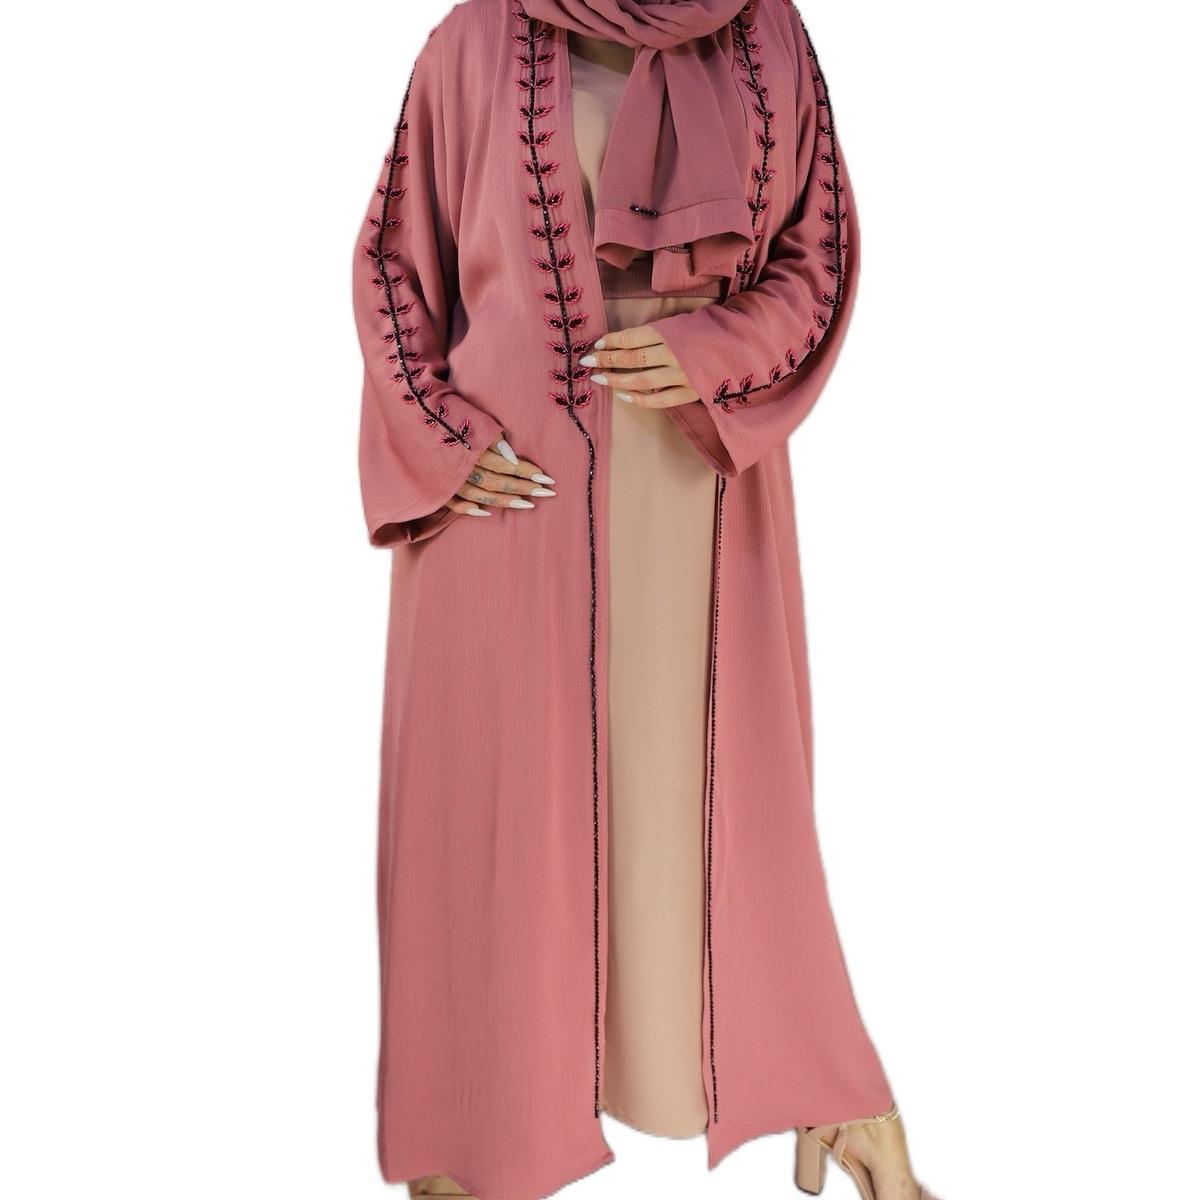 Party Wear Pink Abaya With Inner Slip Dress, Beautiful Stone Handwork.